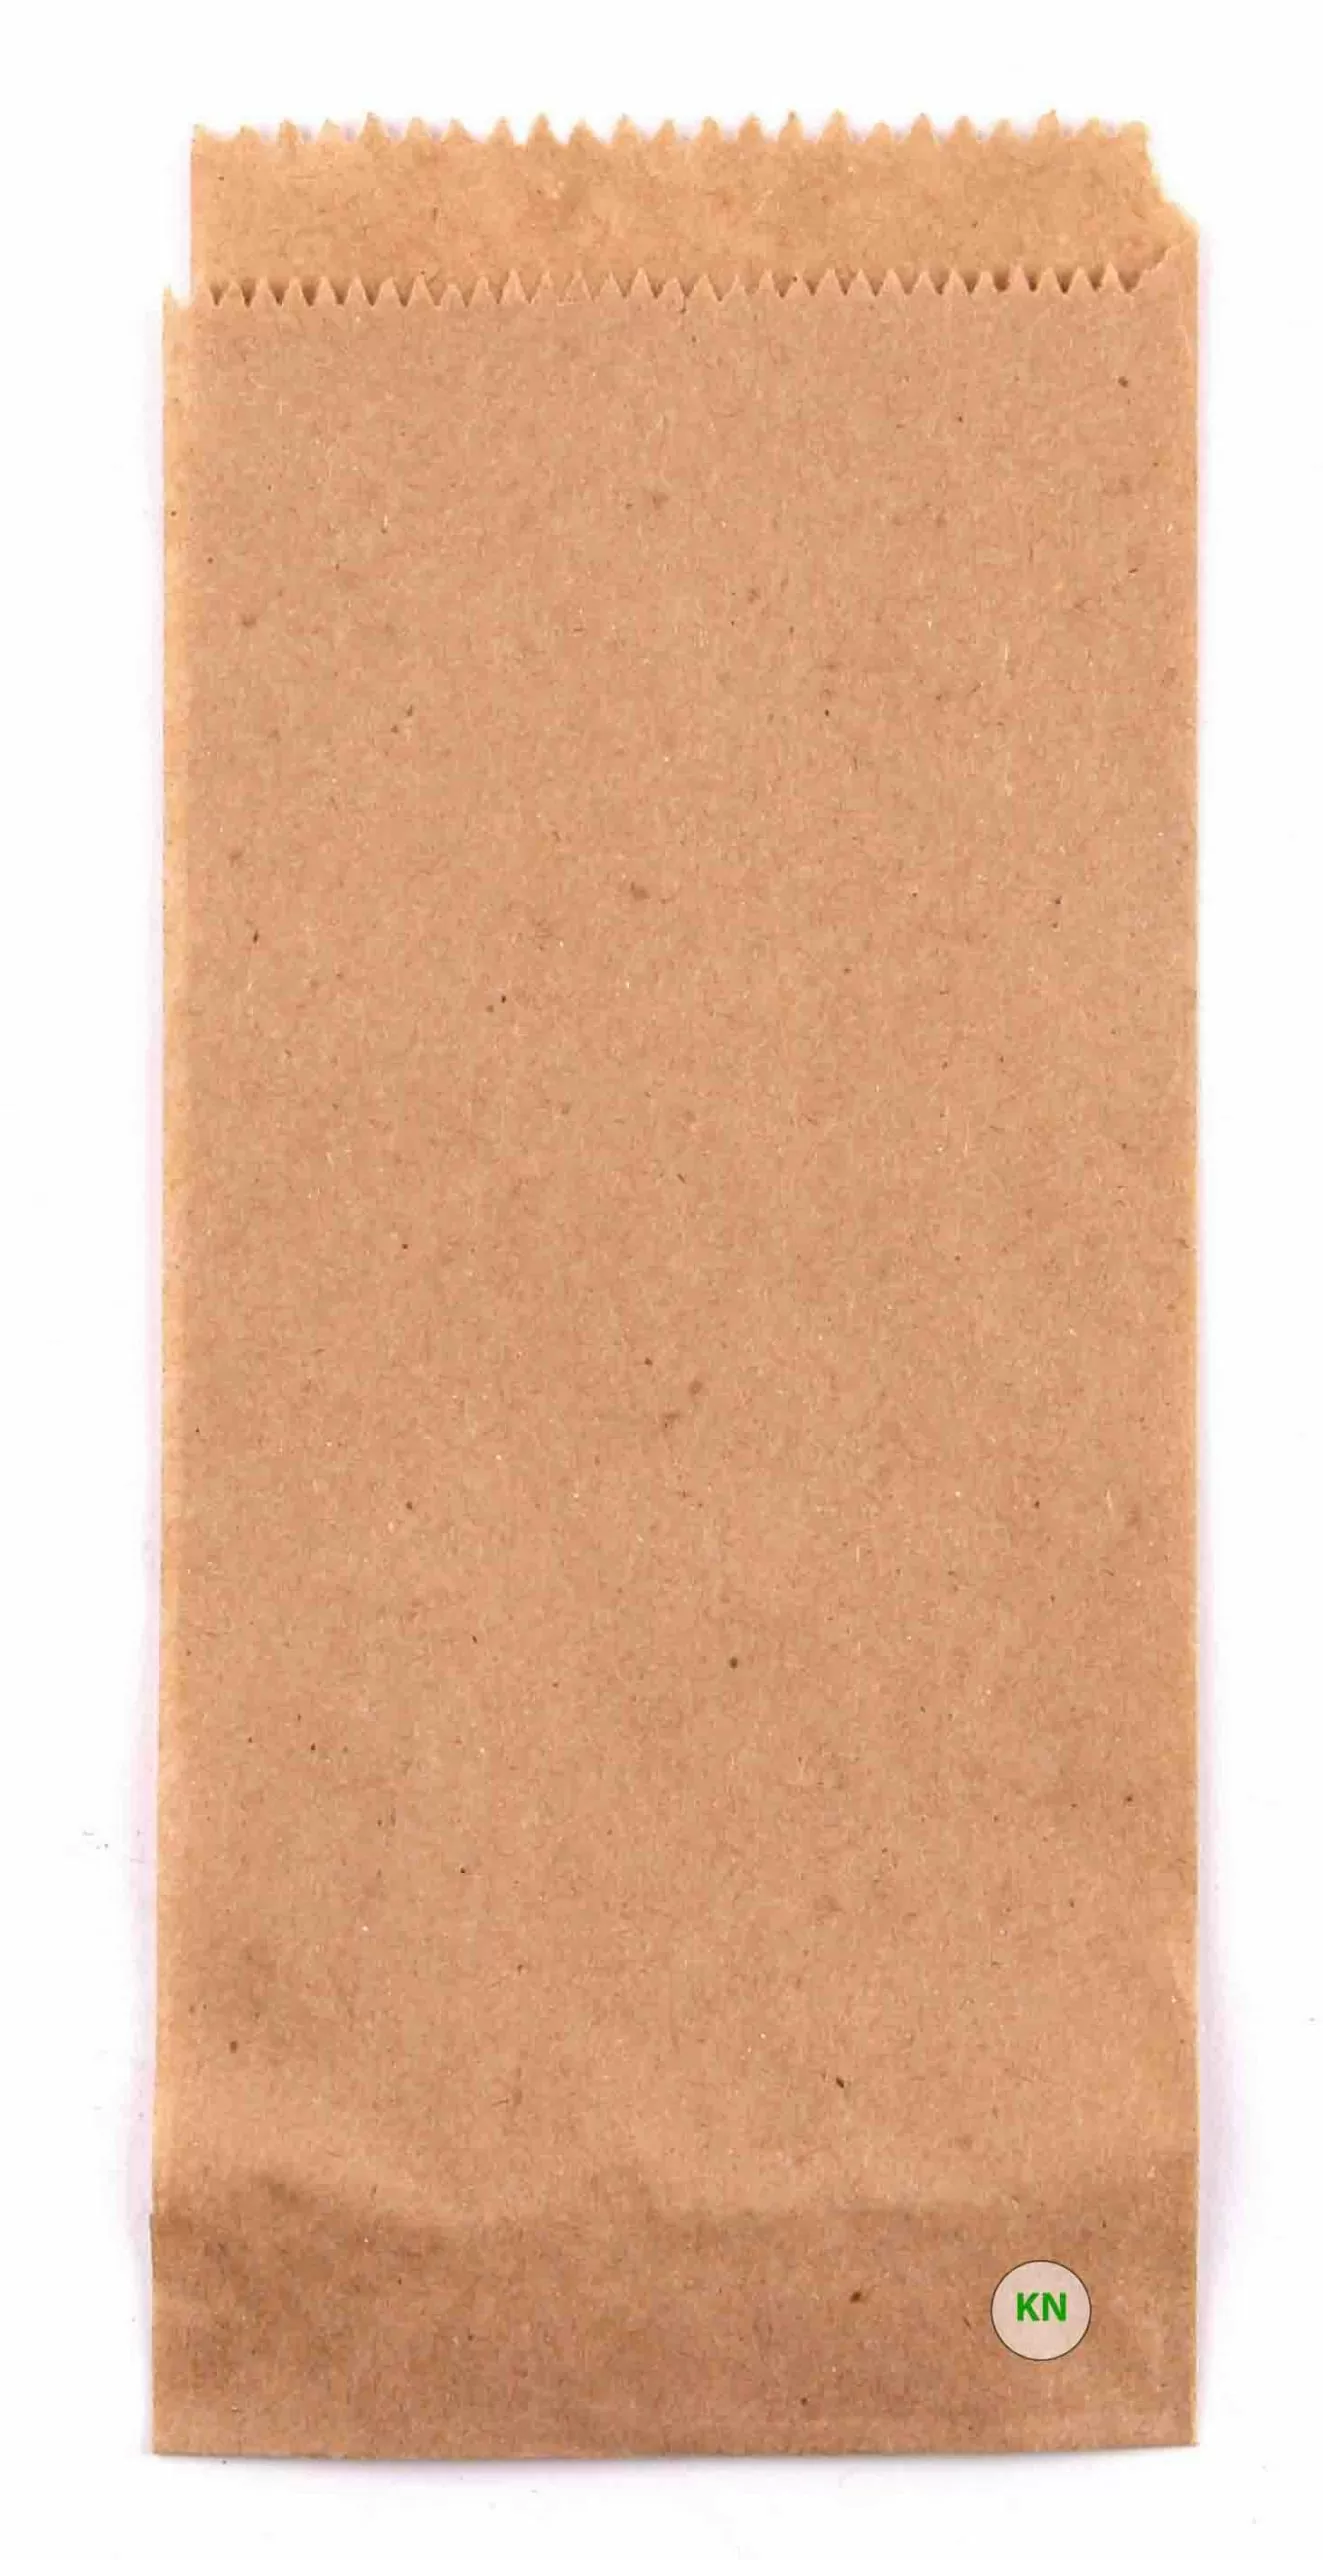 Пакет бумажный коричневый для хот-дога, 230 х 100 мм